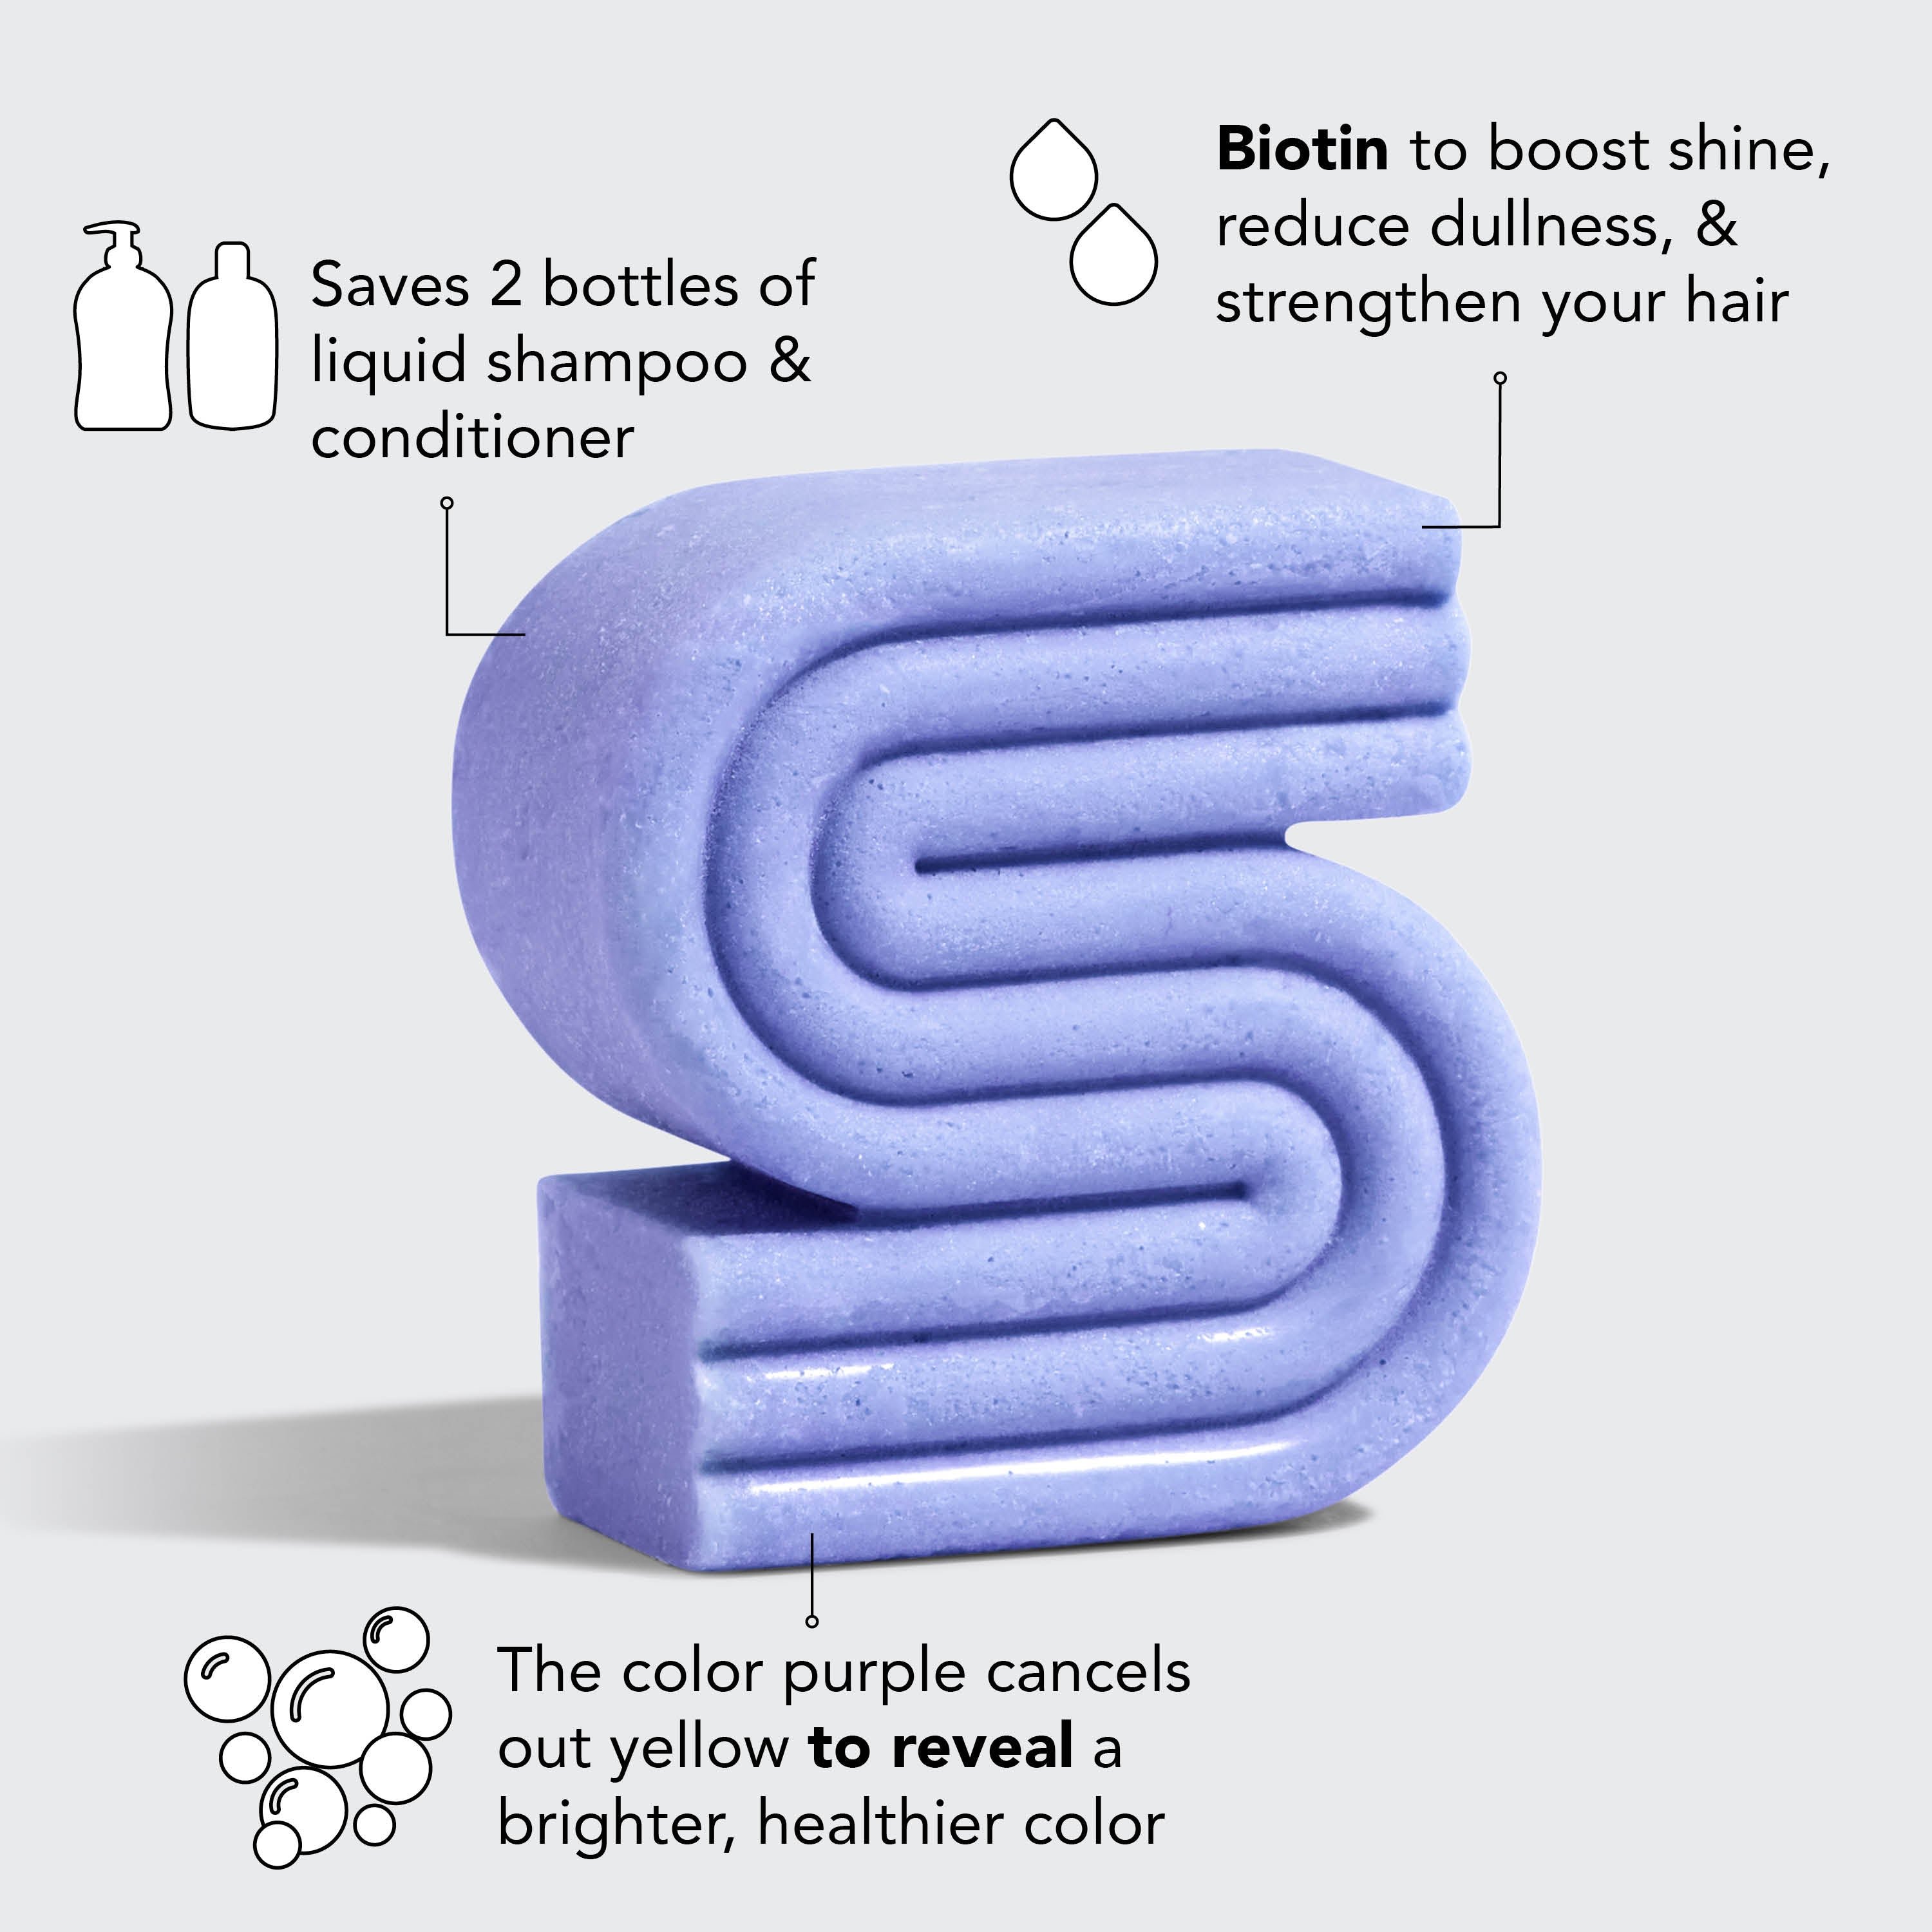 Bundel met paarse shampoo en conditioner met biotine